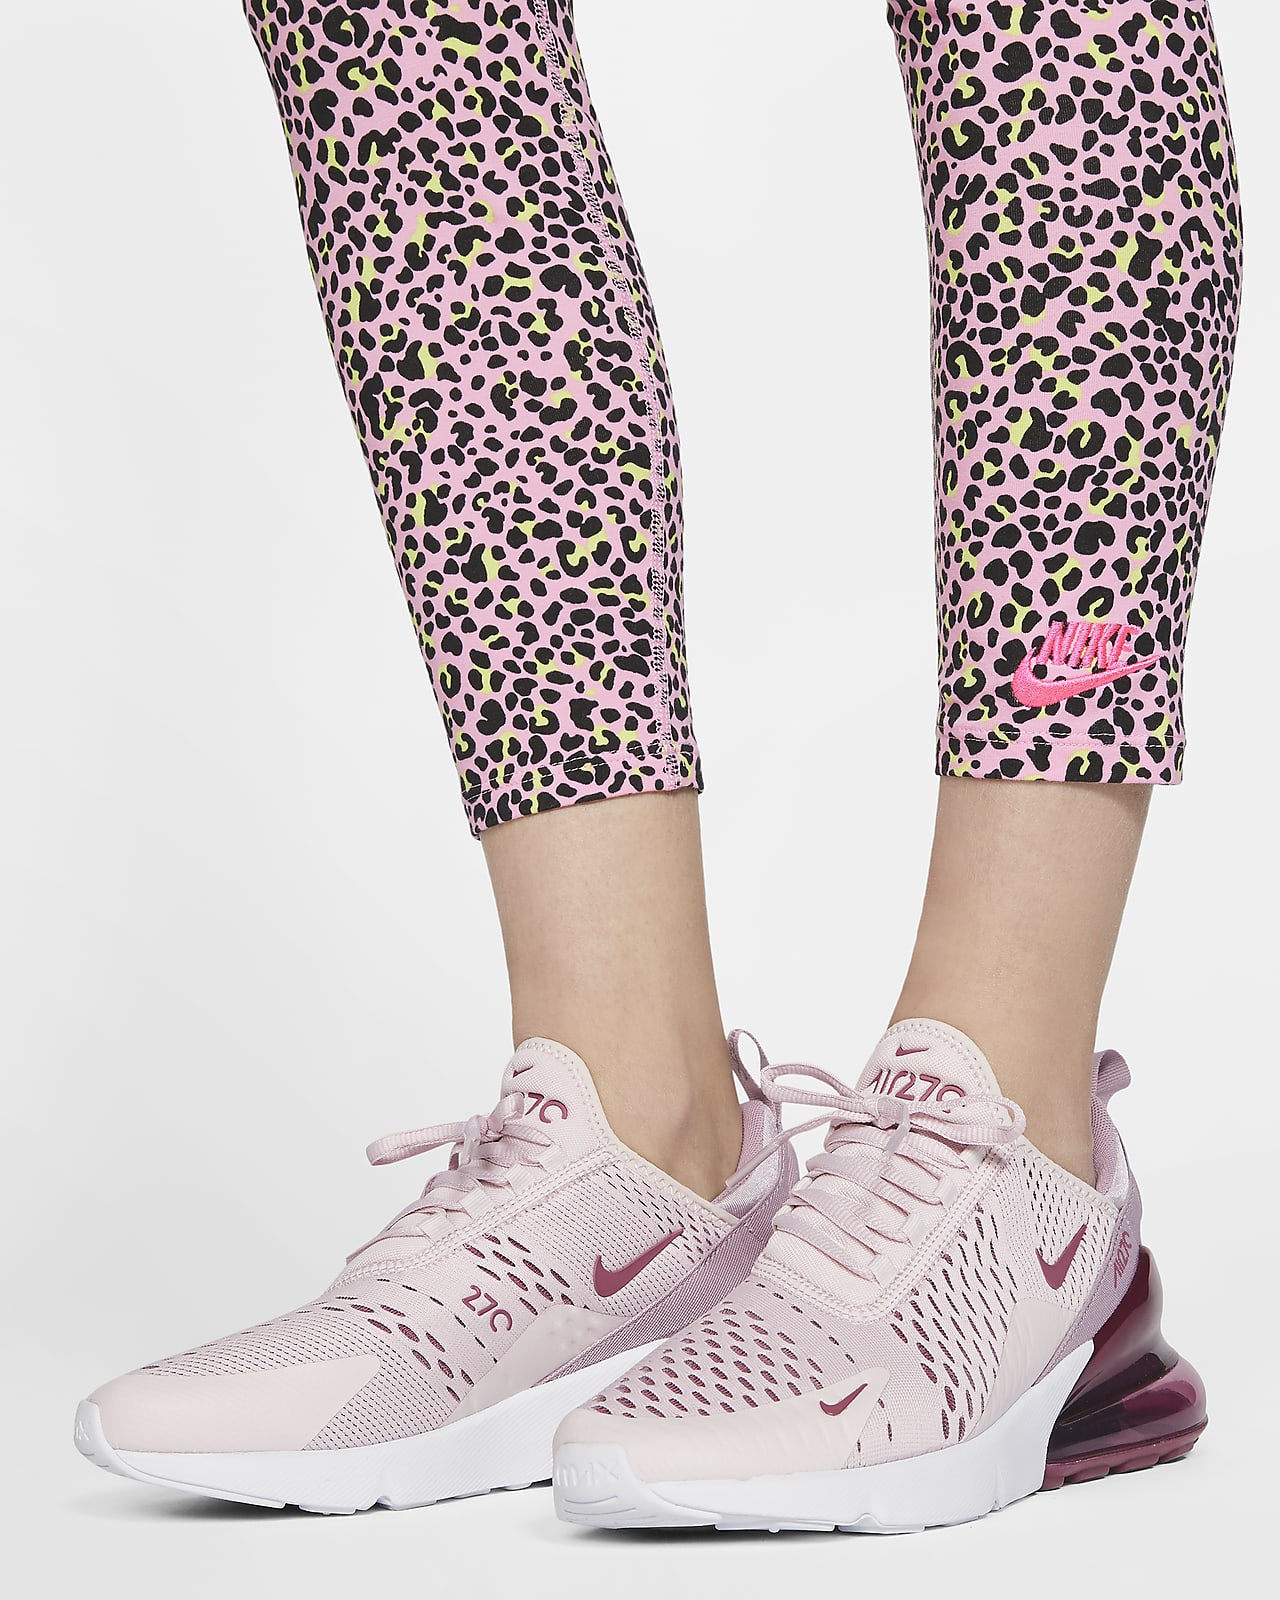 nike pink leopard print leggings